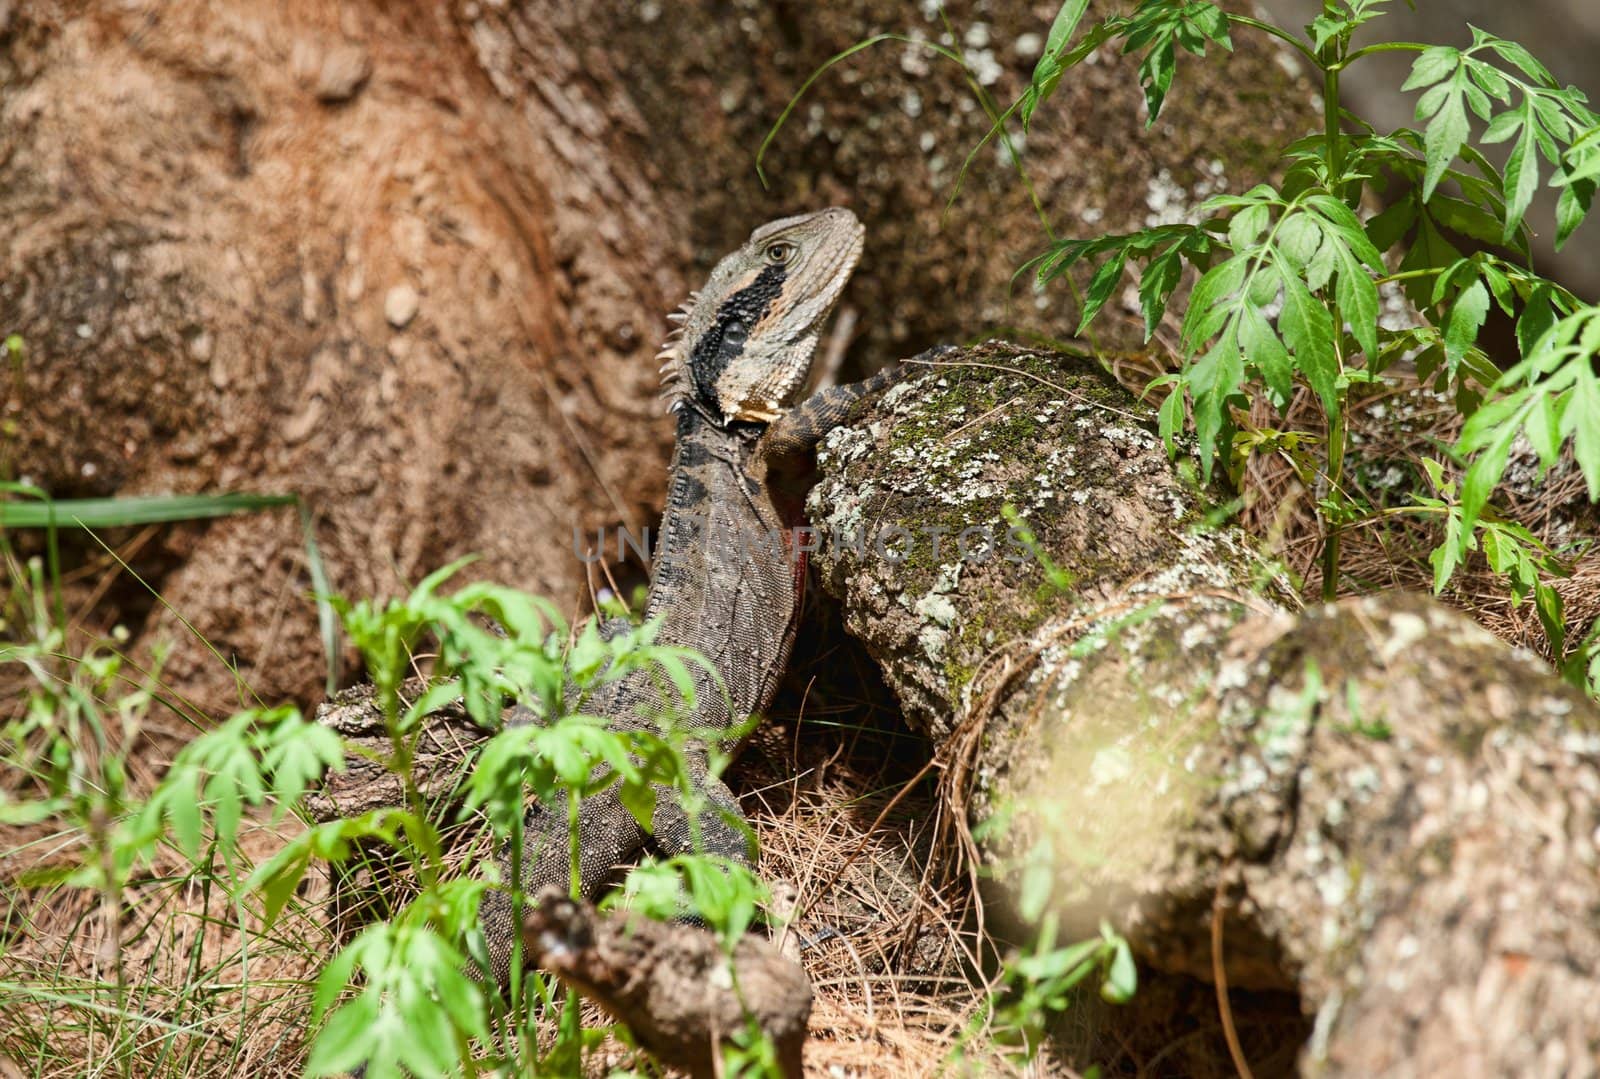 eastern water dragon lizard by clearviewstock